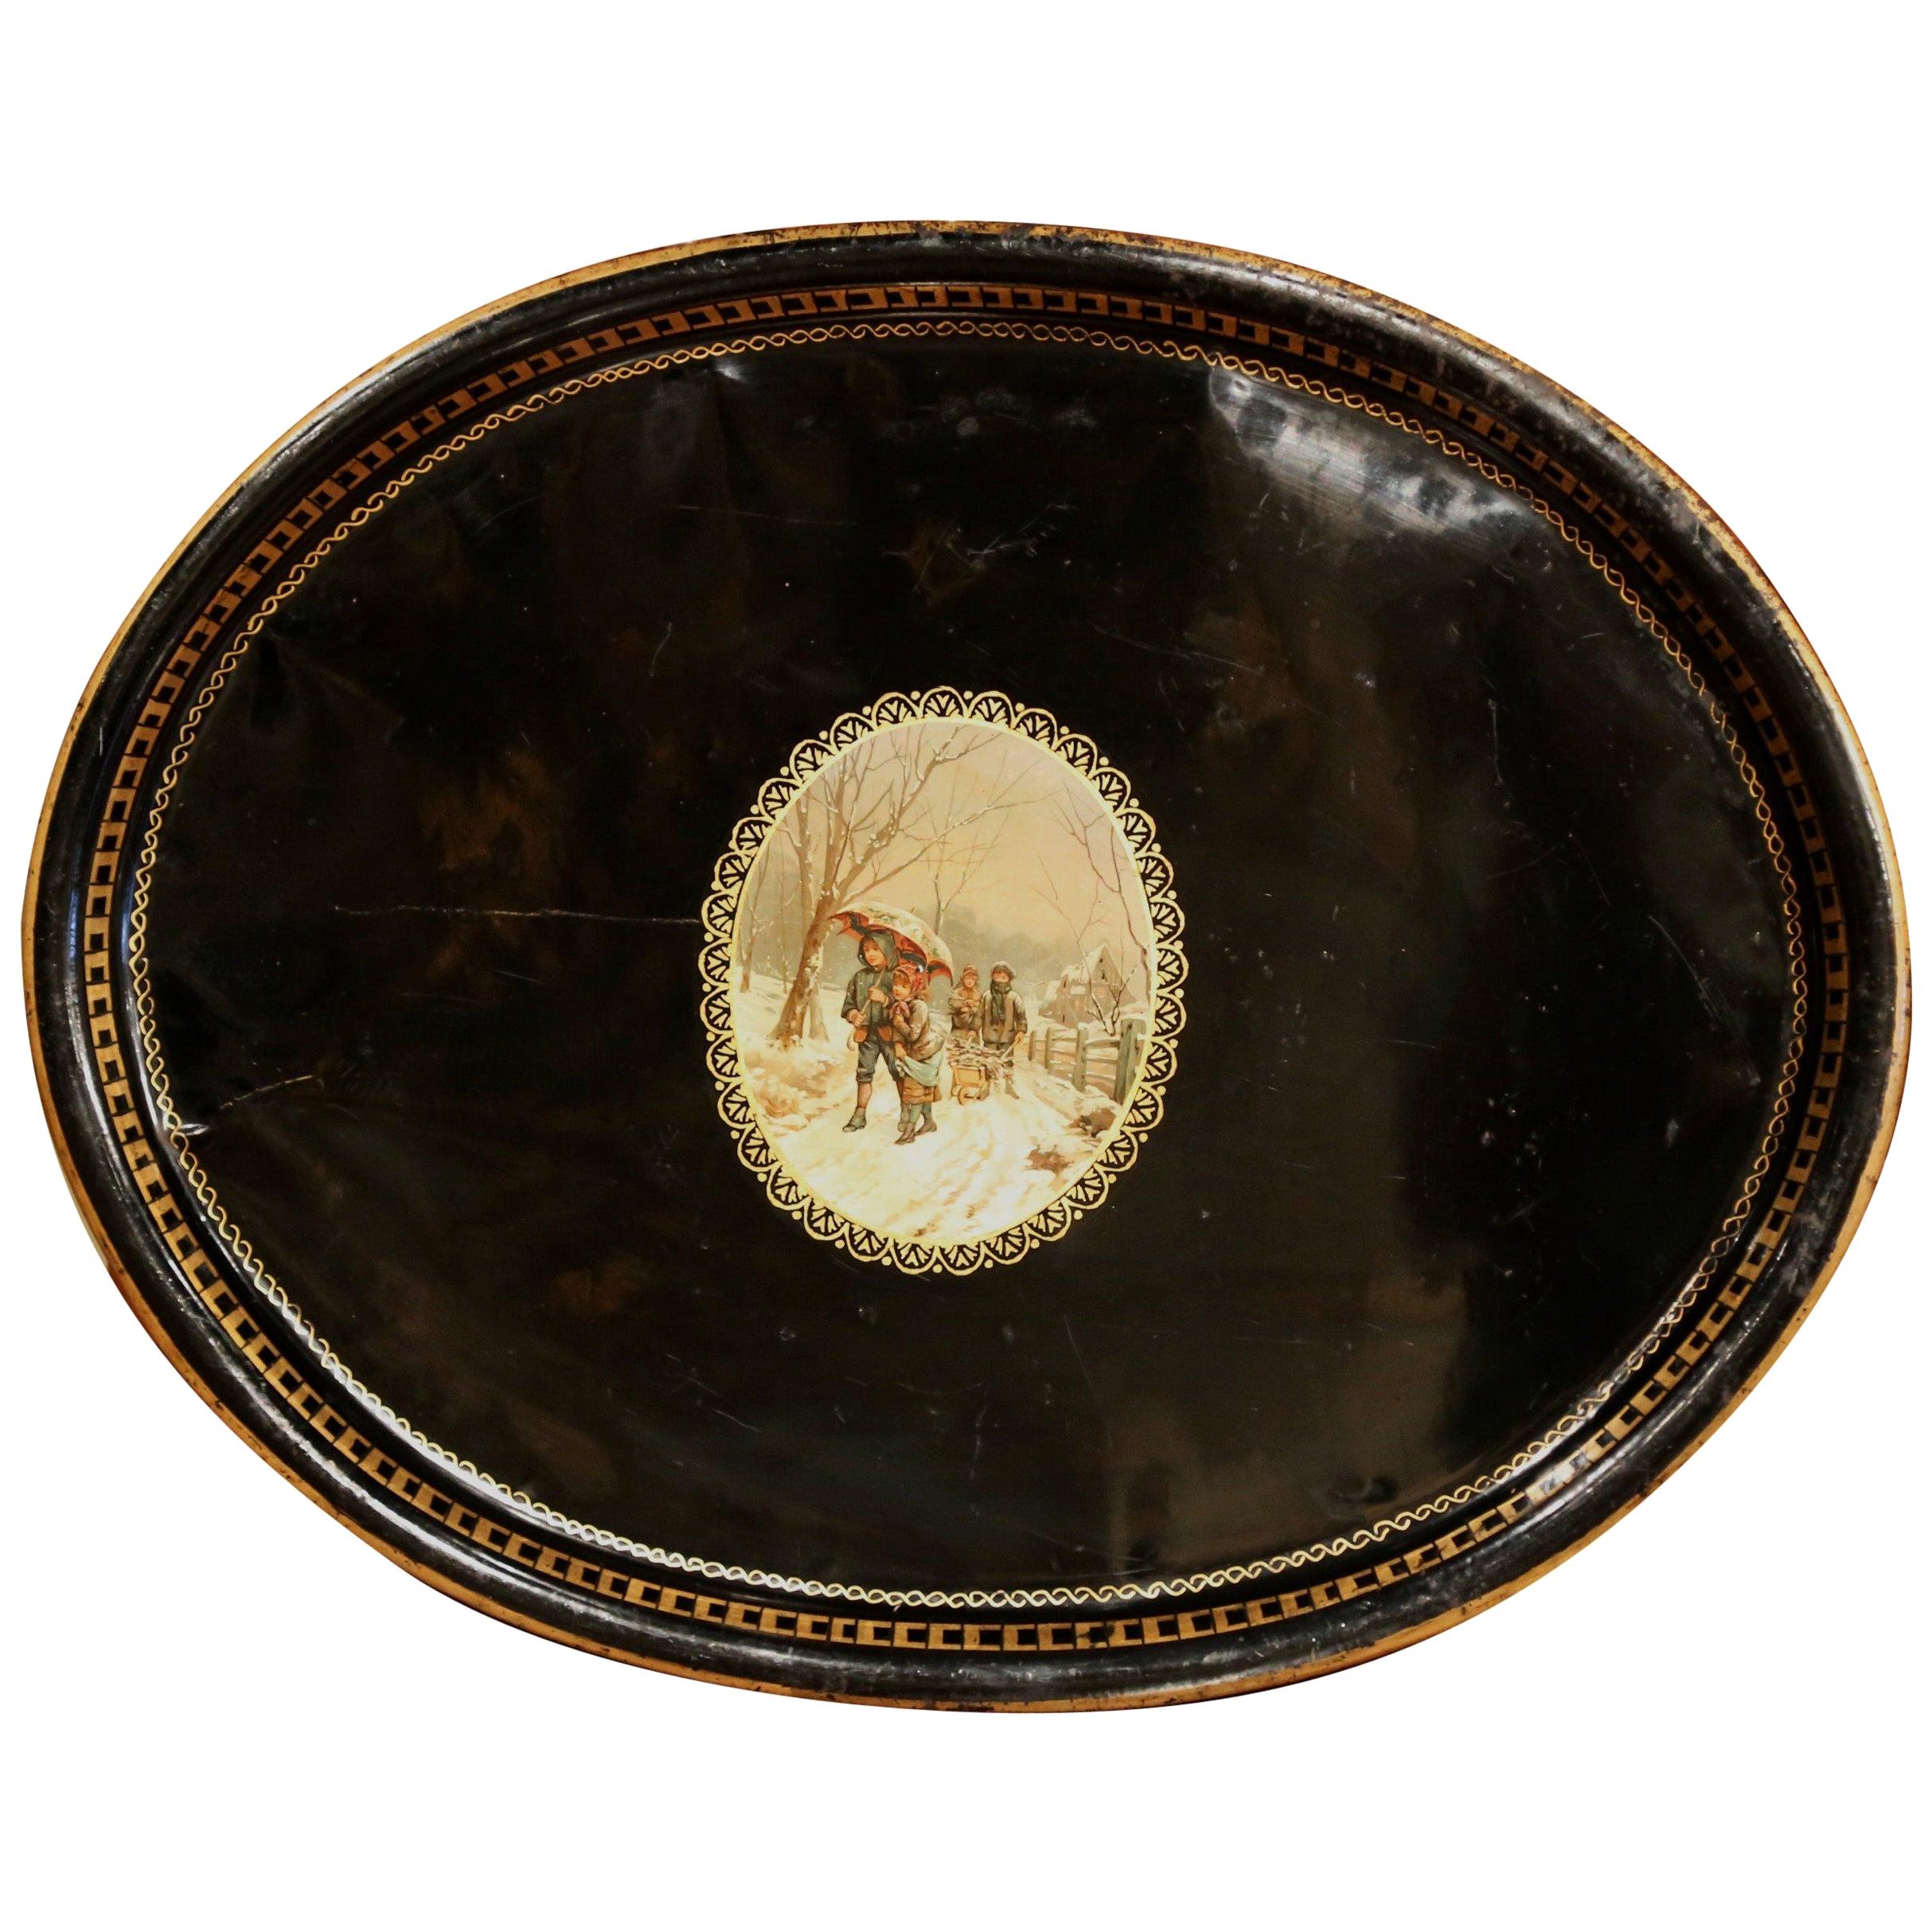 Französisches Napoleon III.-Tablett des 19. Jahrhunderts mit ovalem Zinntablett und handbemalter Medaillon